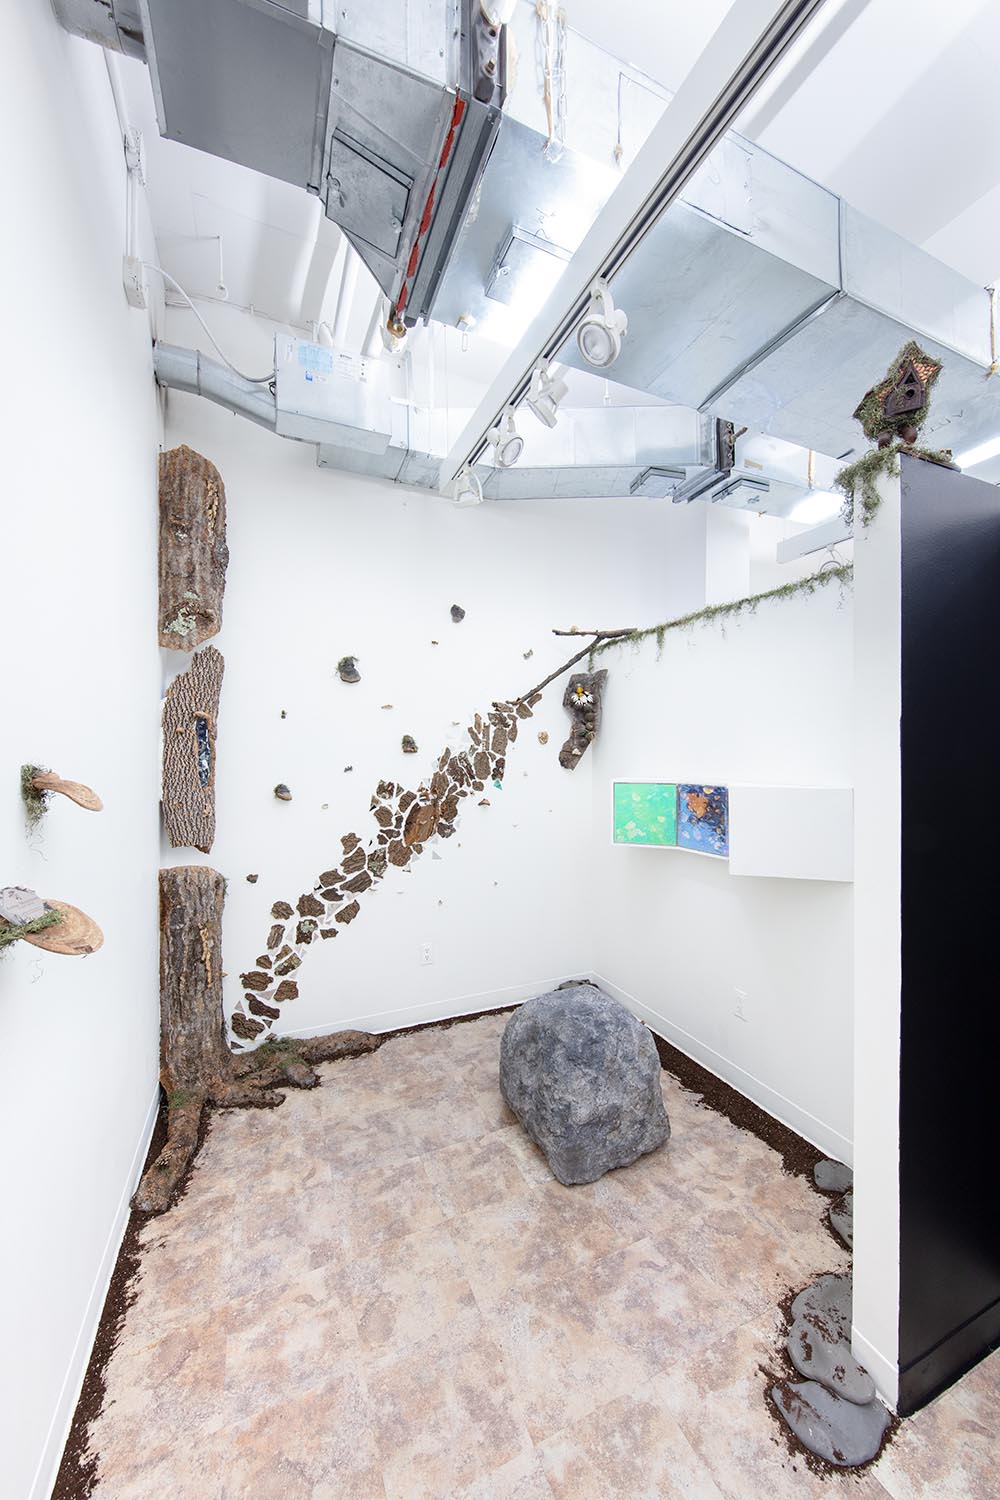 Annie Morrissey: The Mycelia Network, 2019, Installation View.